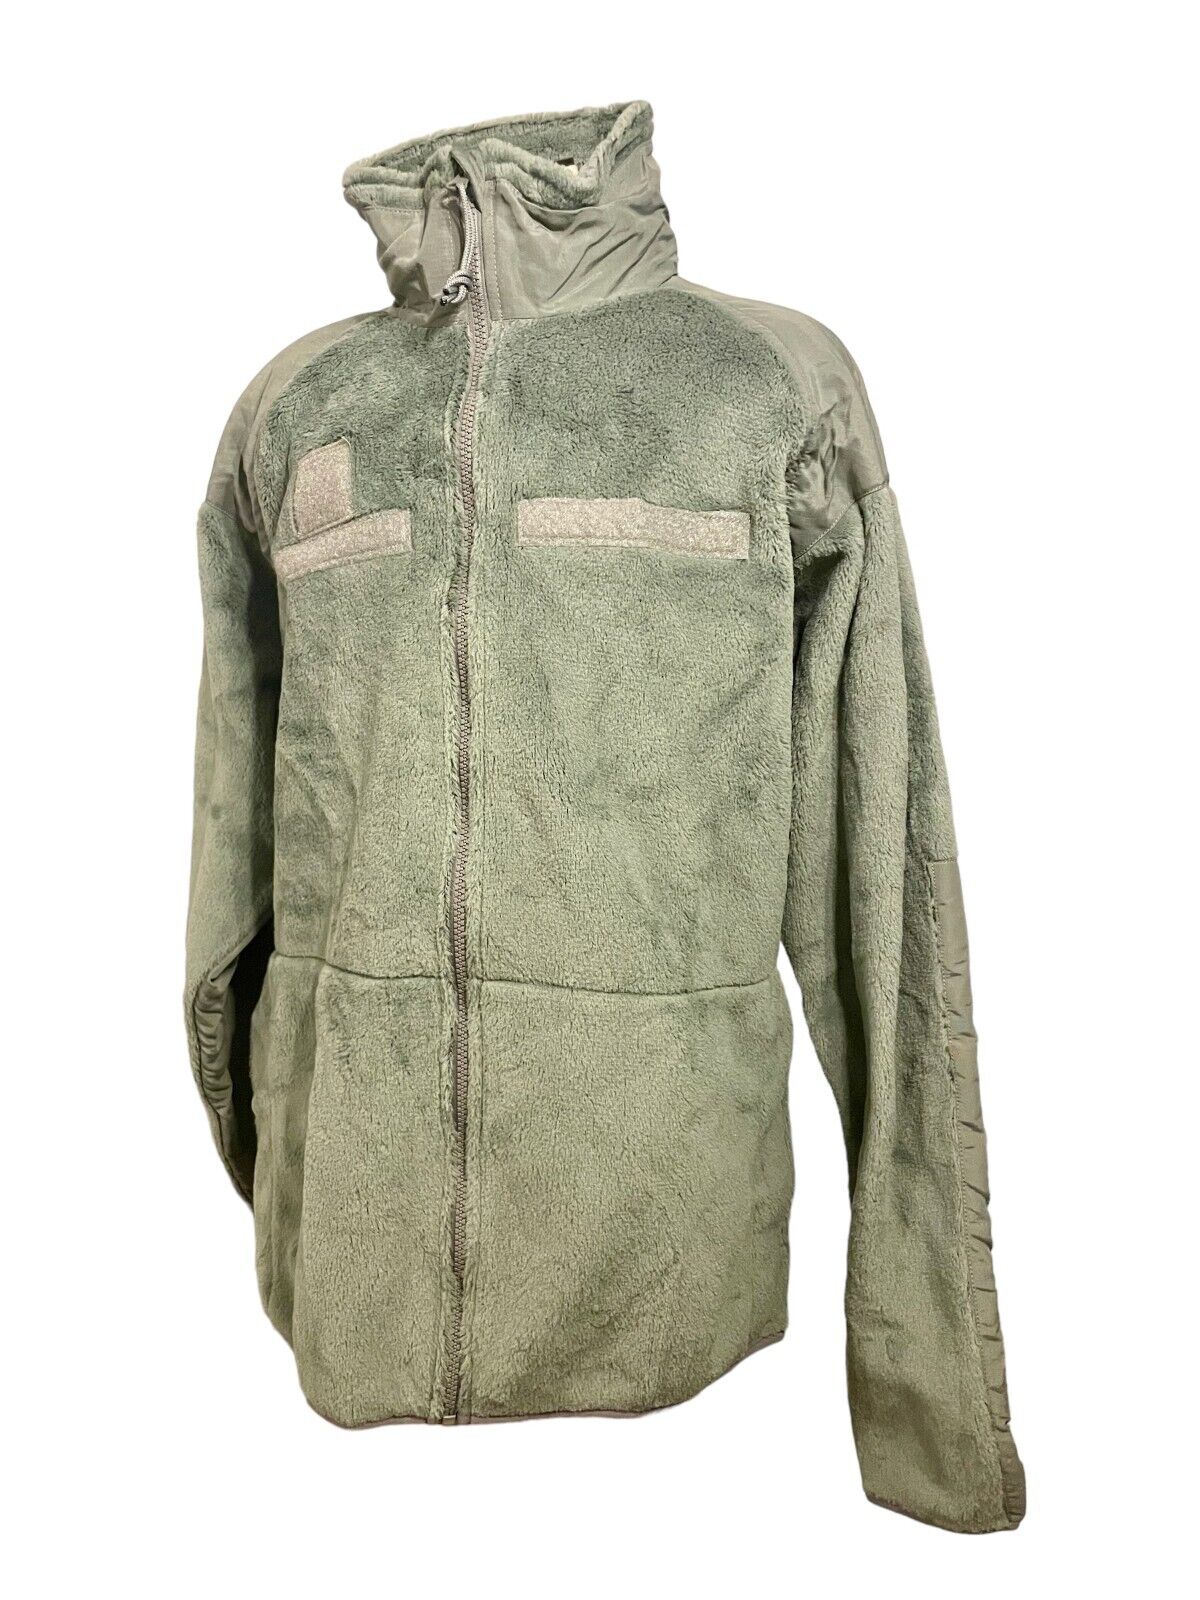 ECWCS GEN III Level 3 Jacket Cold Weather Polartec Foliage Green Medium Long VGC